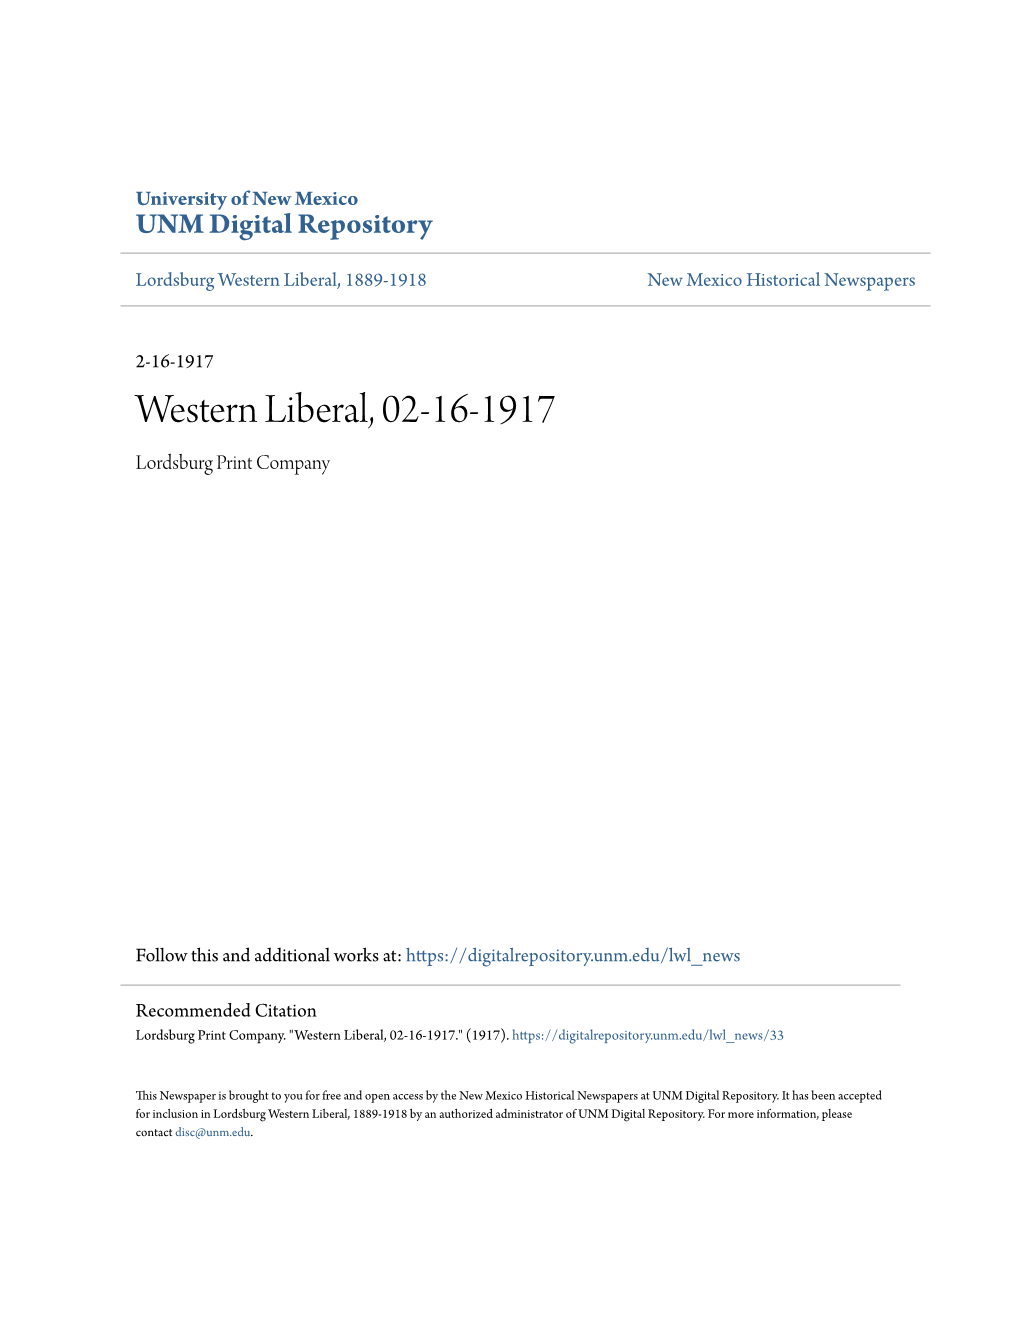 Western Liberal, 02-16-1917 Lordsburg Print Company